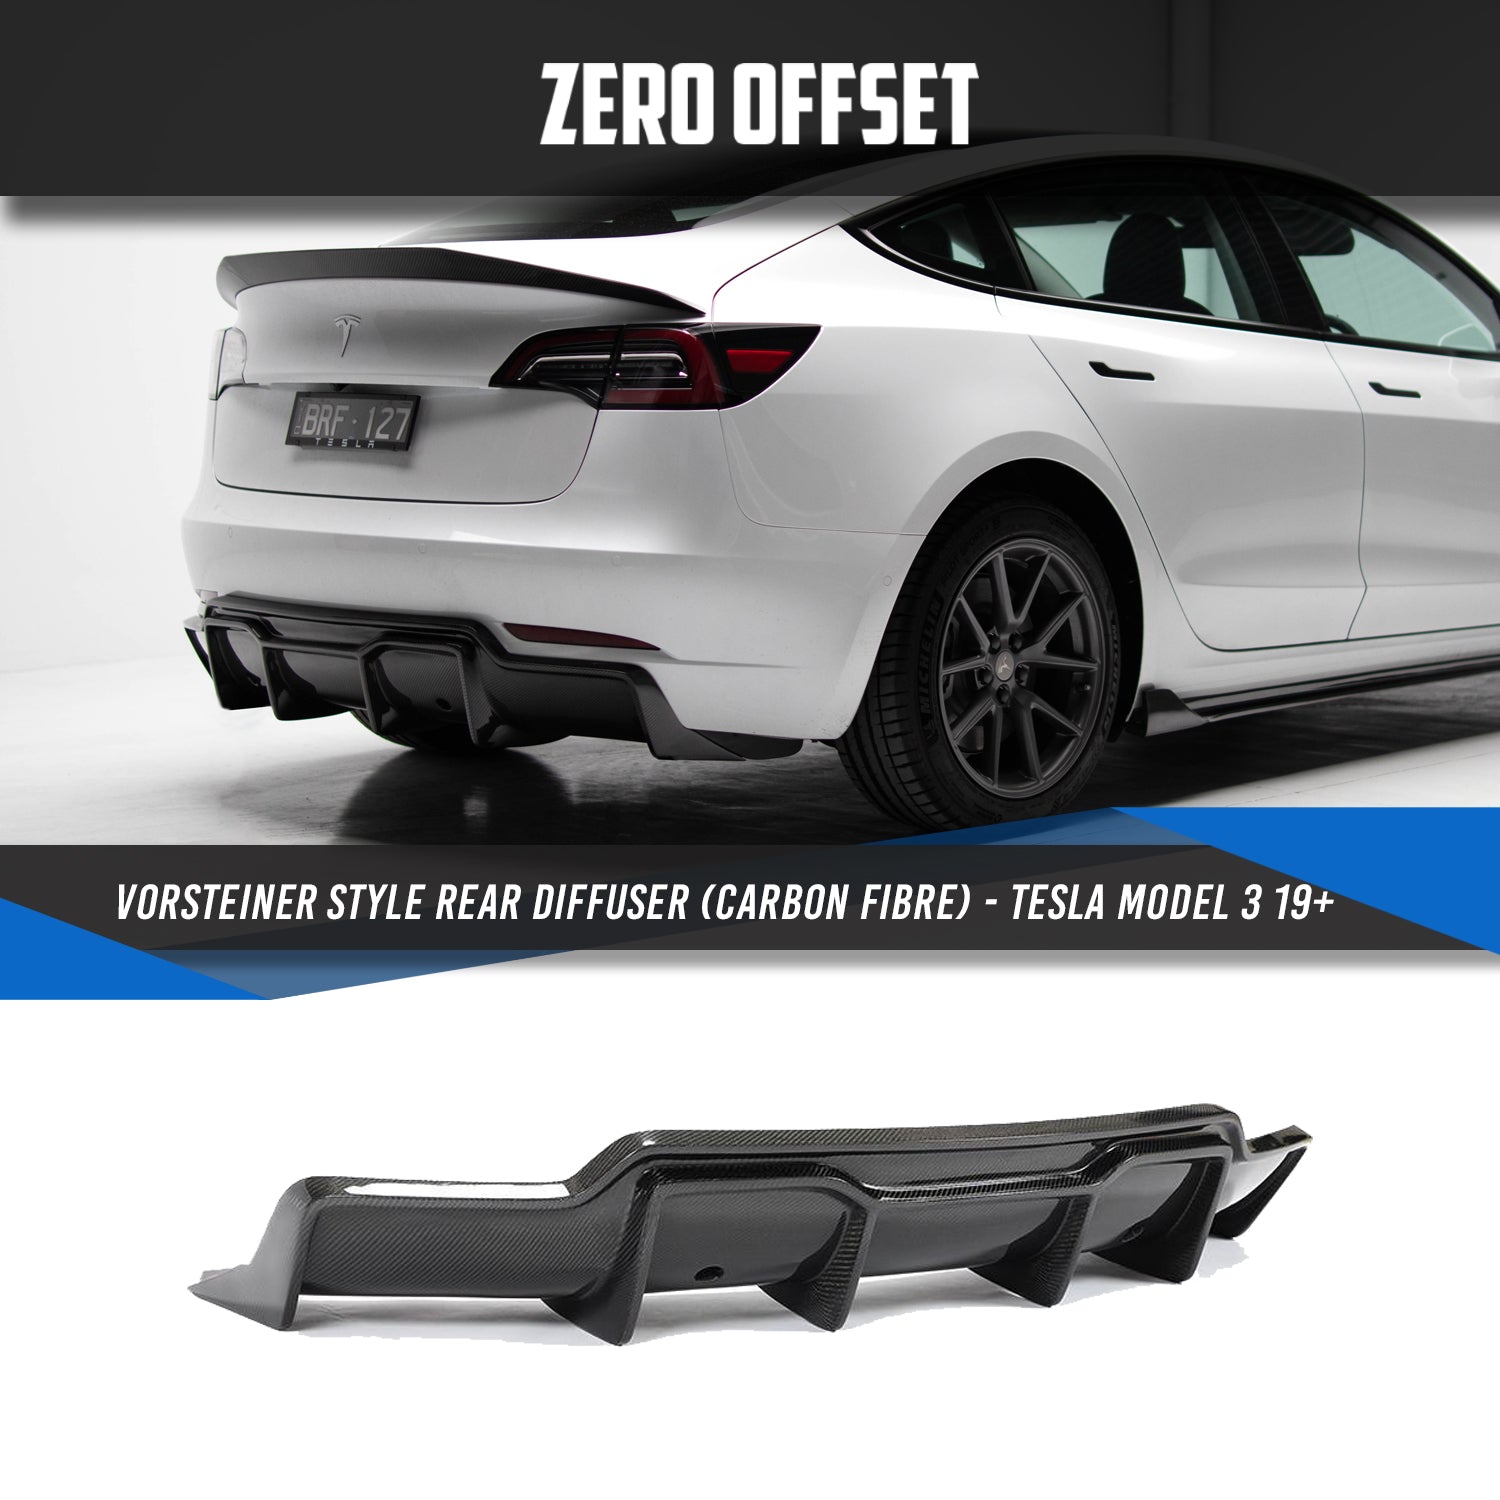 Zero Offset Vorsteiner Style Rear Diffuser (Carbon Fibre) for Tesla Model 3  19+